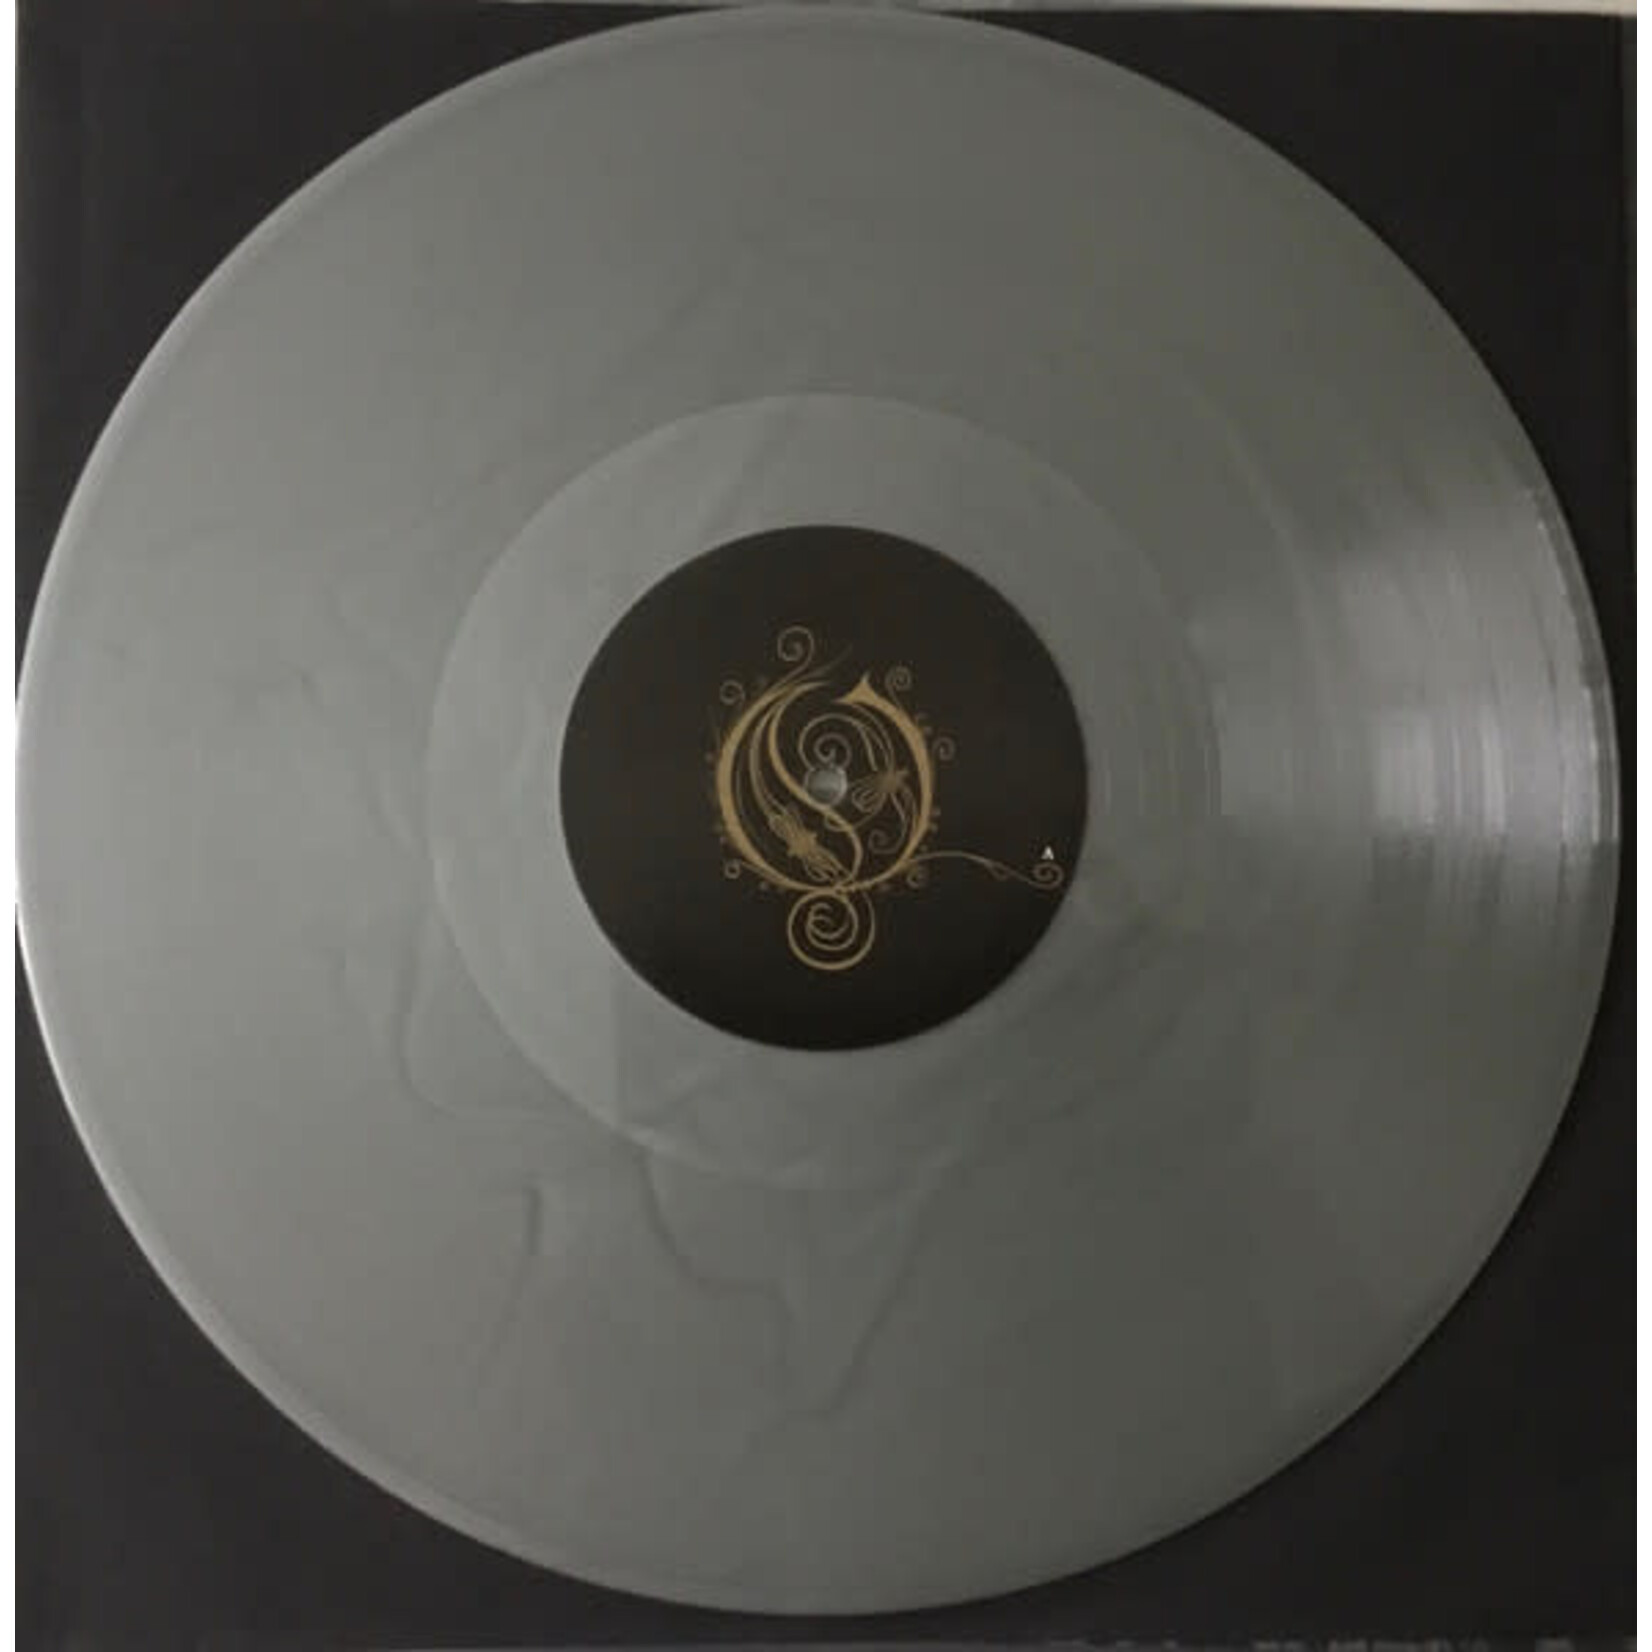 [New] Opeth - Morningrise (2LP, silver vinyl)